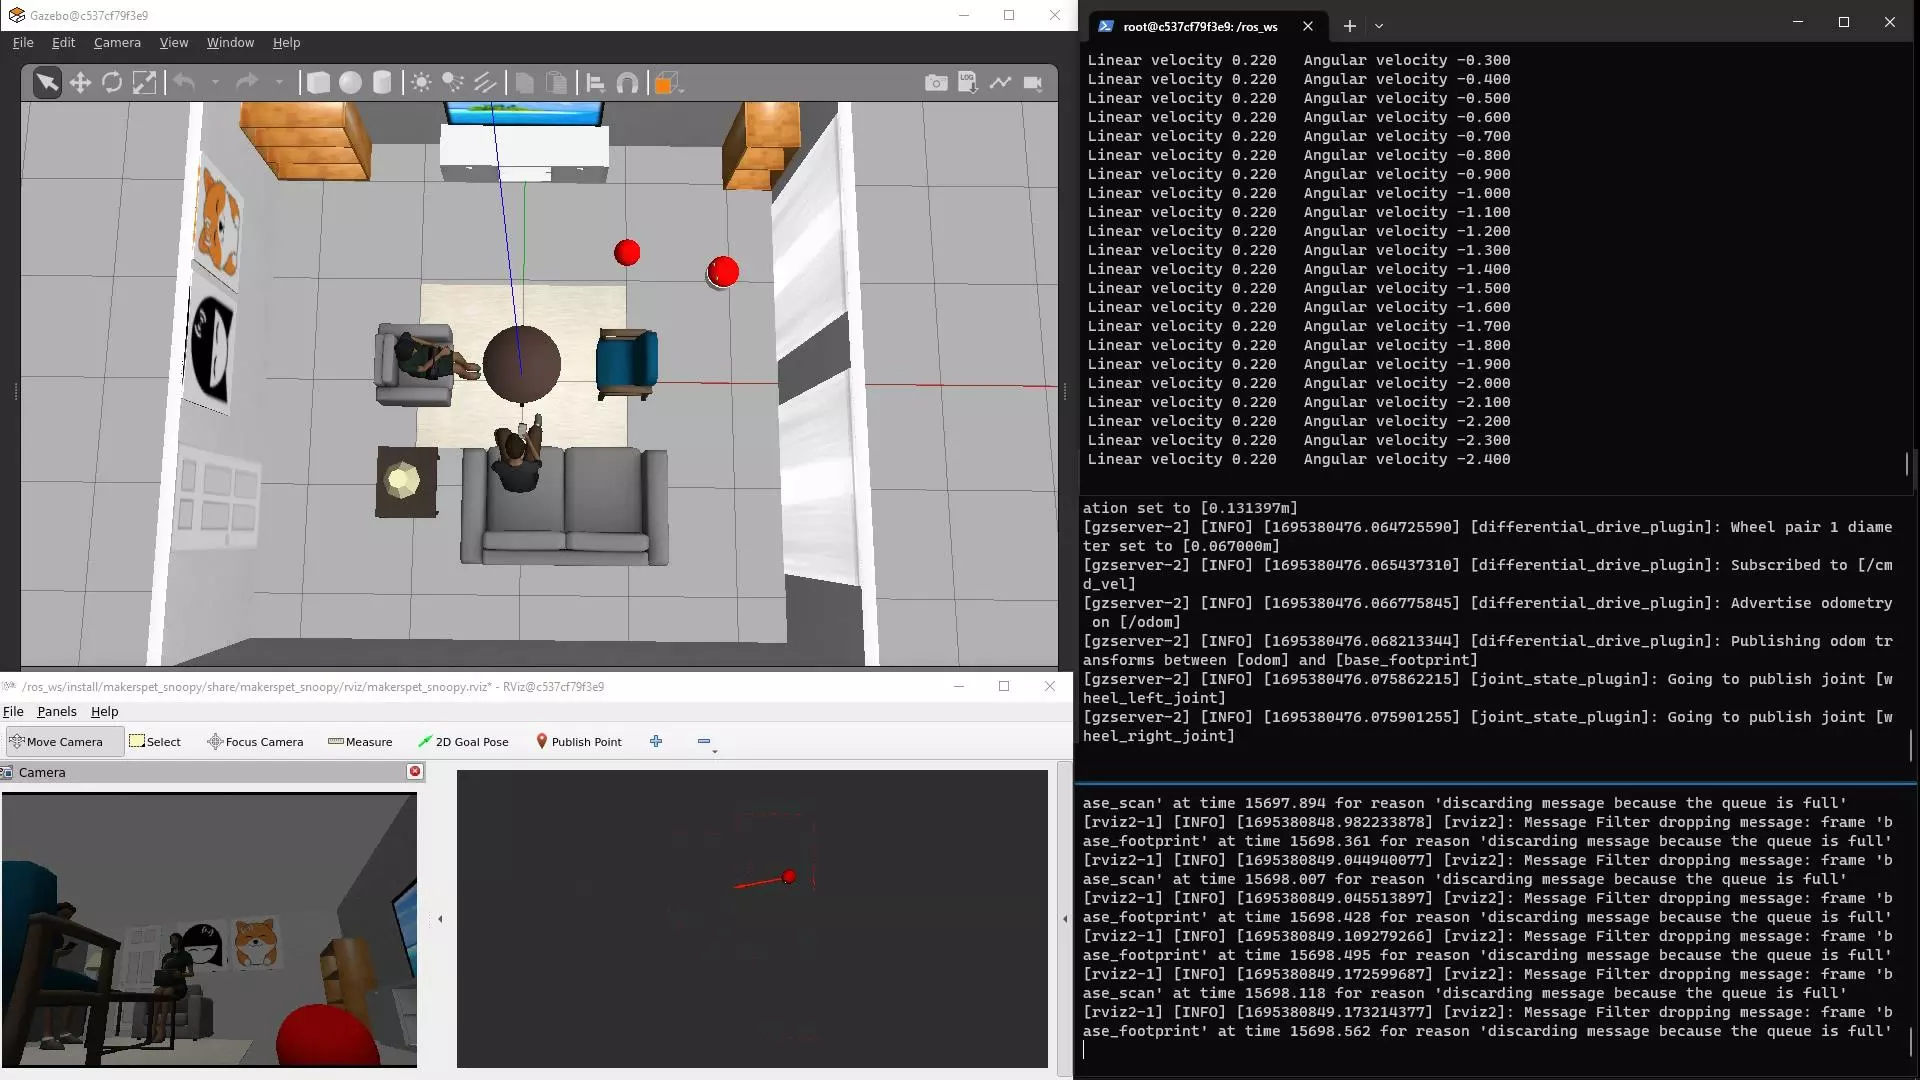 Tutorial: Simulate Home Robot in 3D (ROS2 Gazebo)